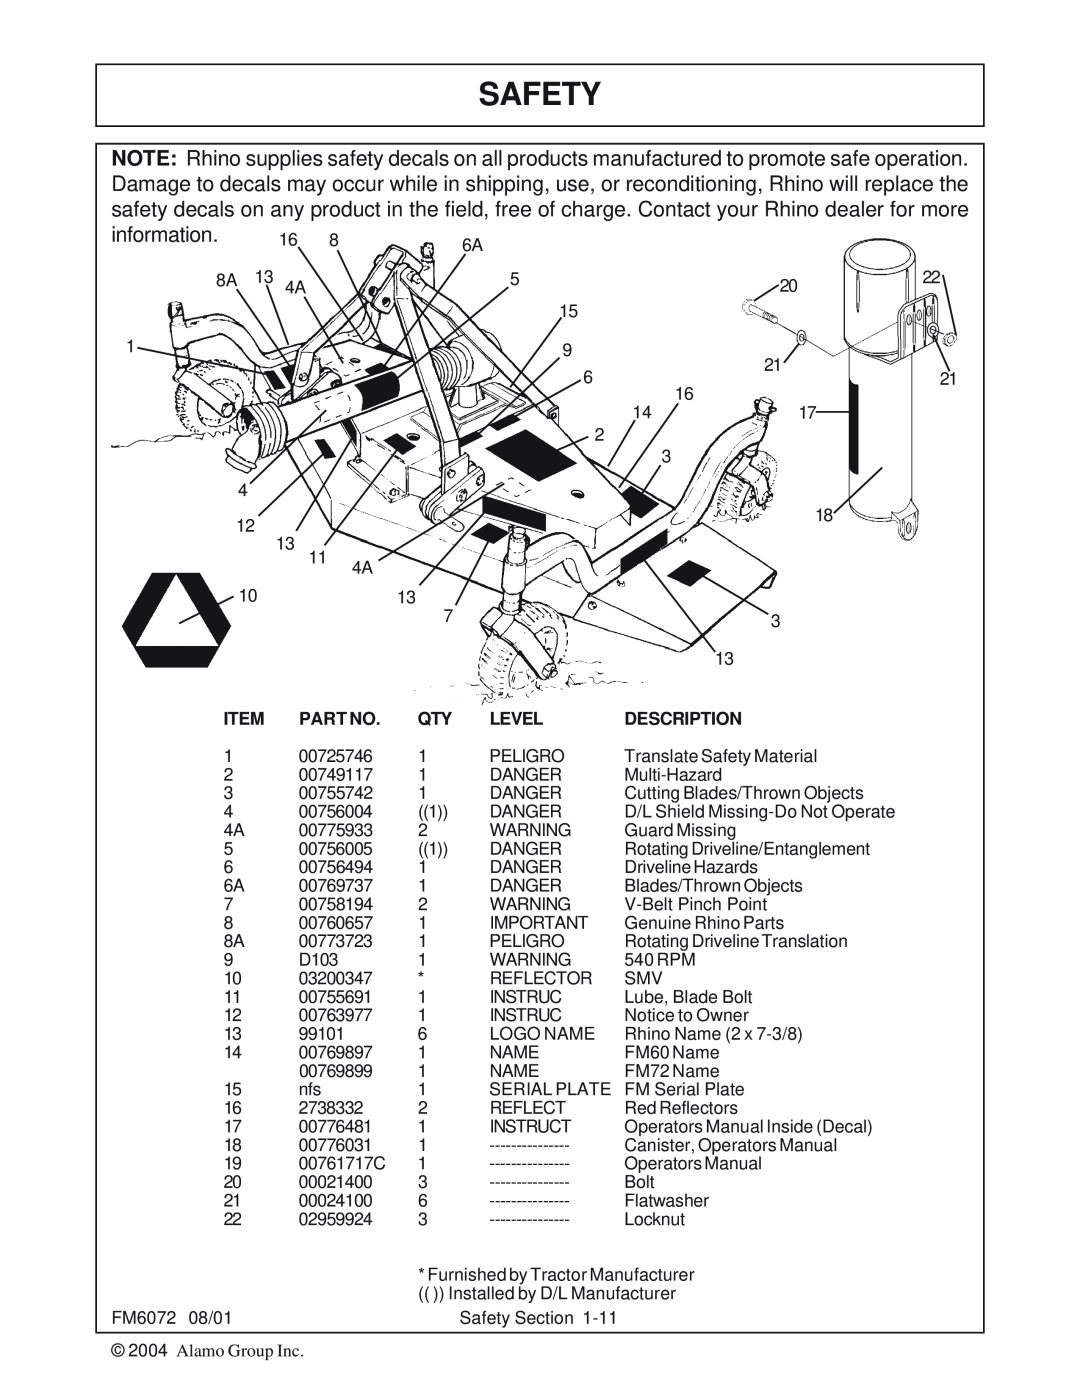 Servis-Rhino FM60/72 manual Safety, information, Level, Description 